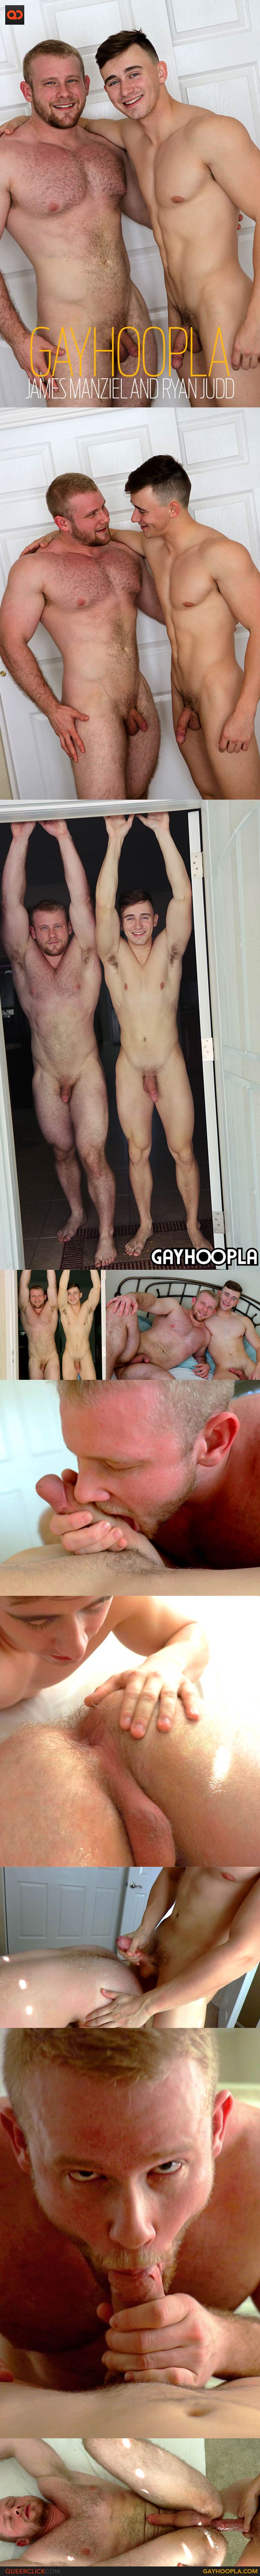 GayHoopla: James Manziel and Ryan Judd